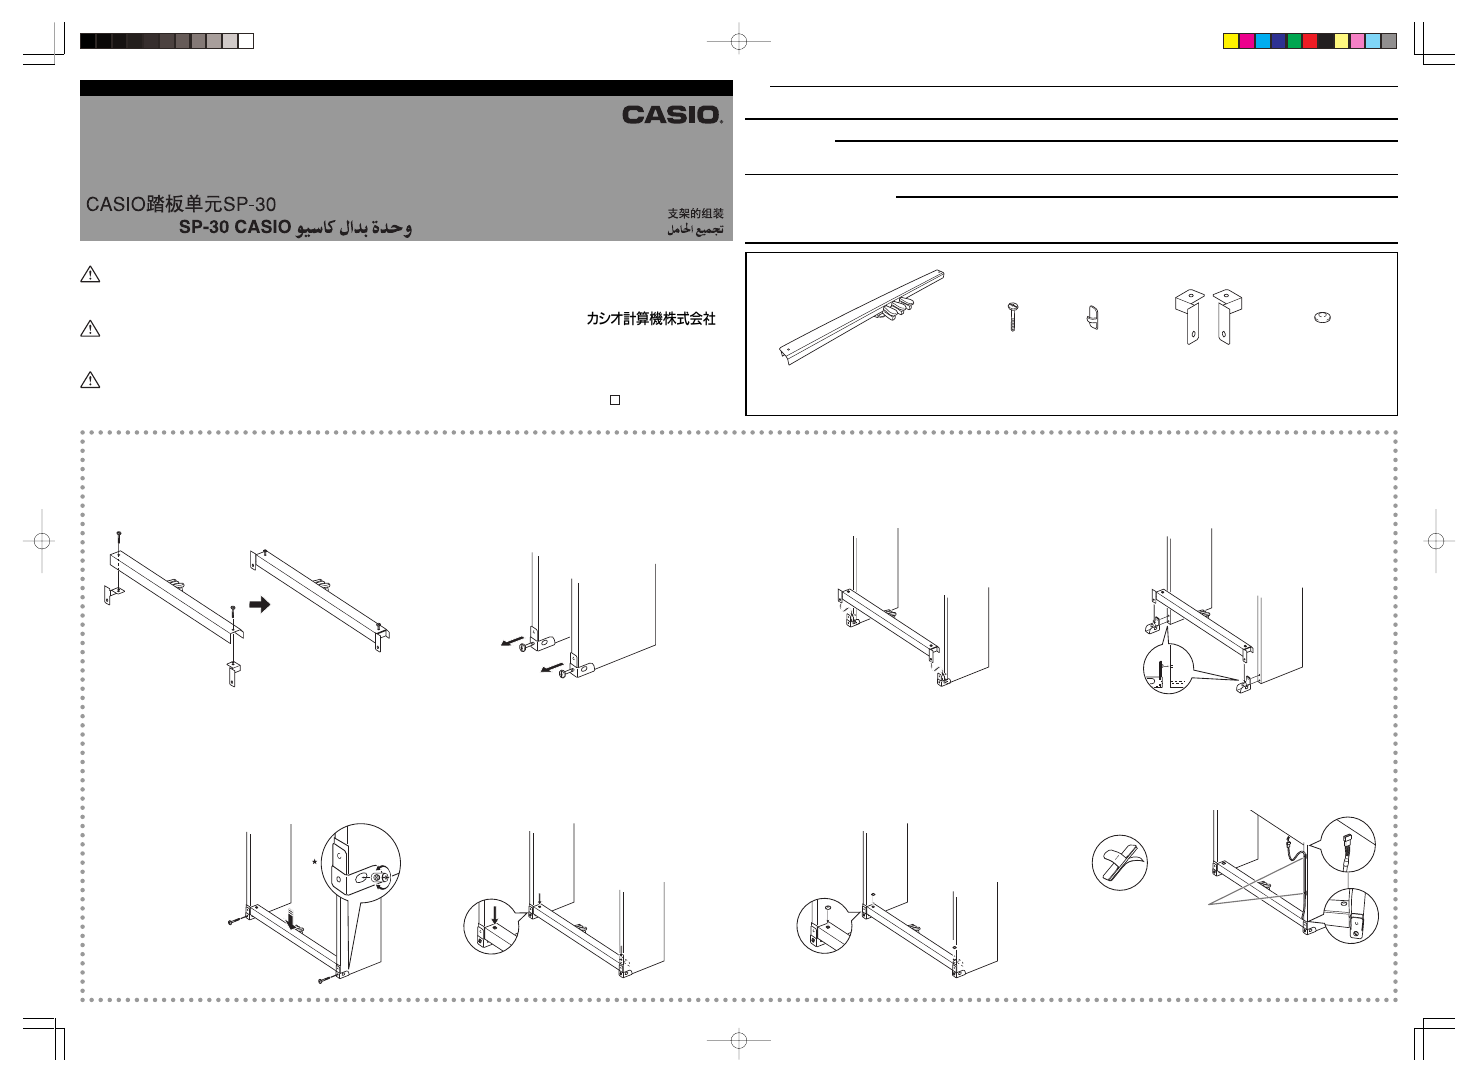 Casio Pedal Unit SP-30 User Manual | 2 pages | Also for: Pedal Unidad SP-30